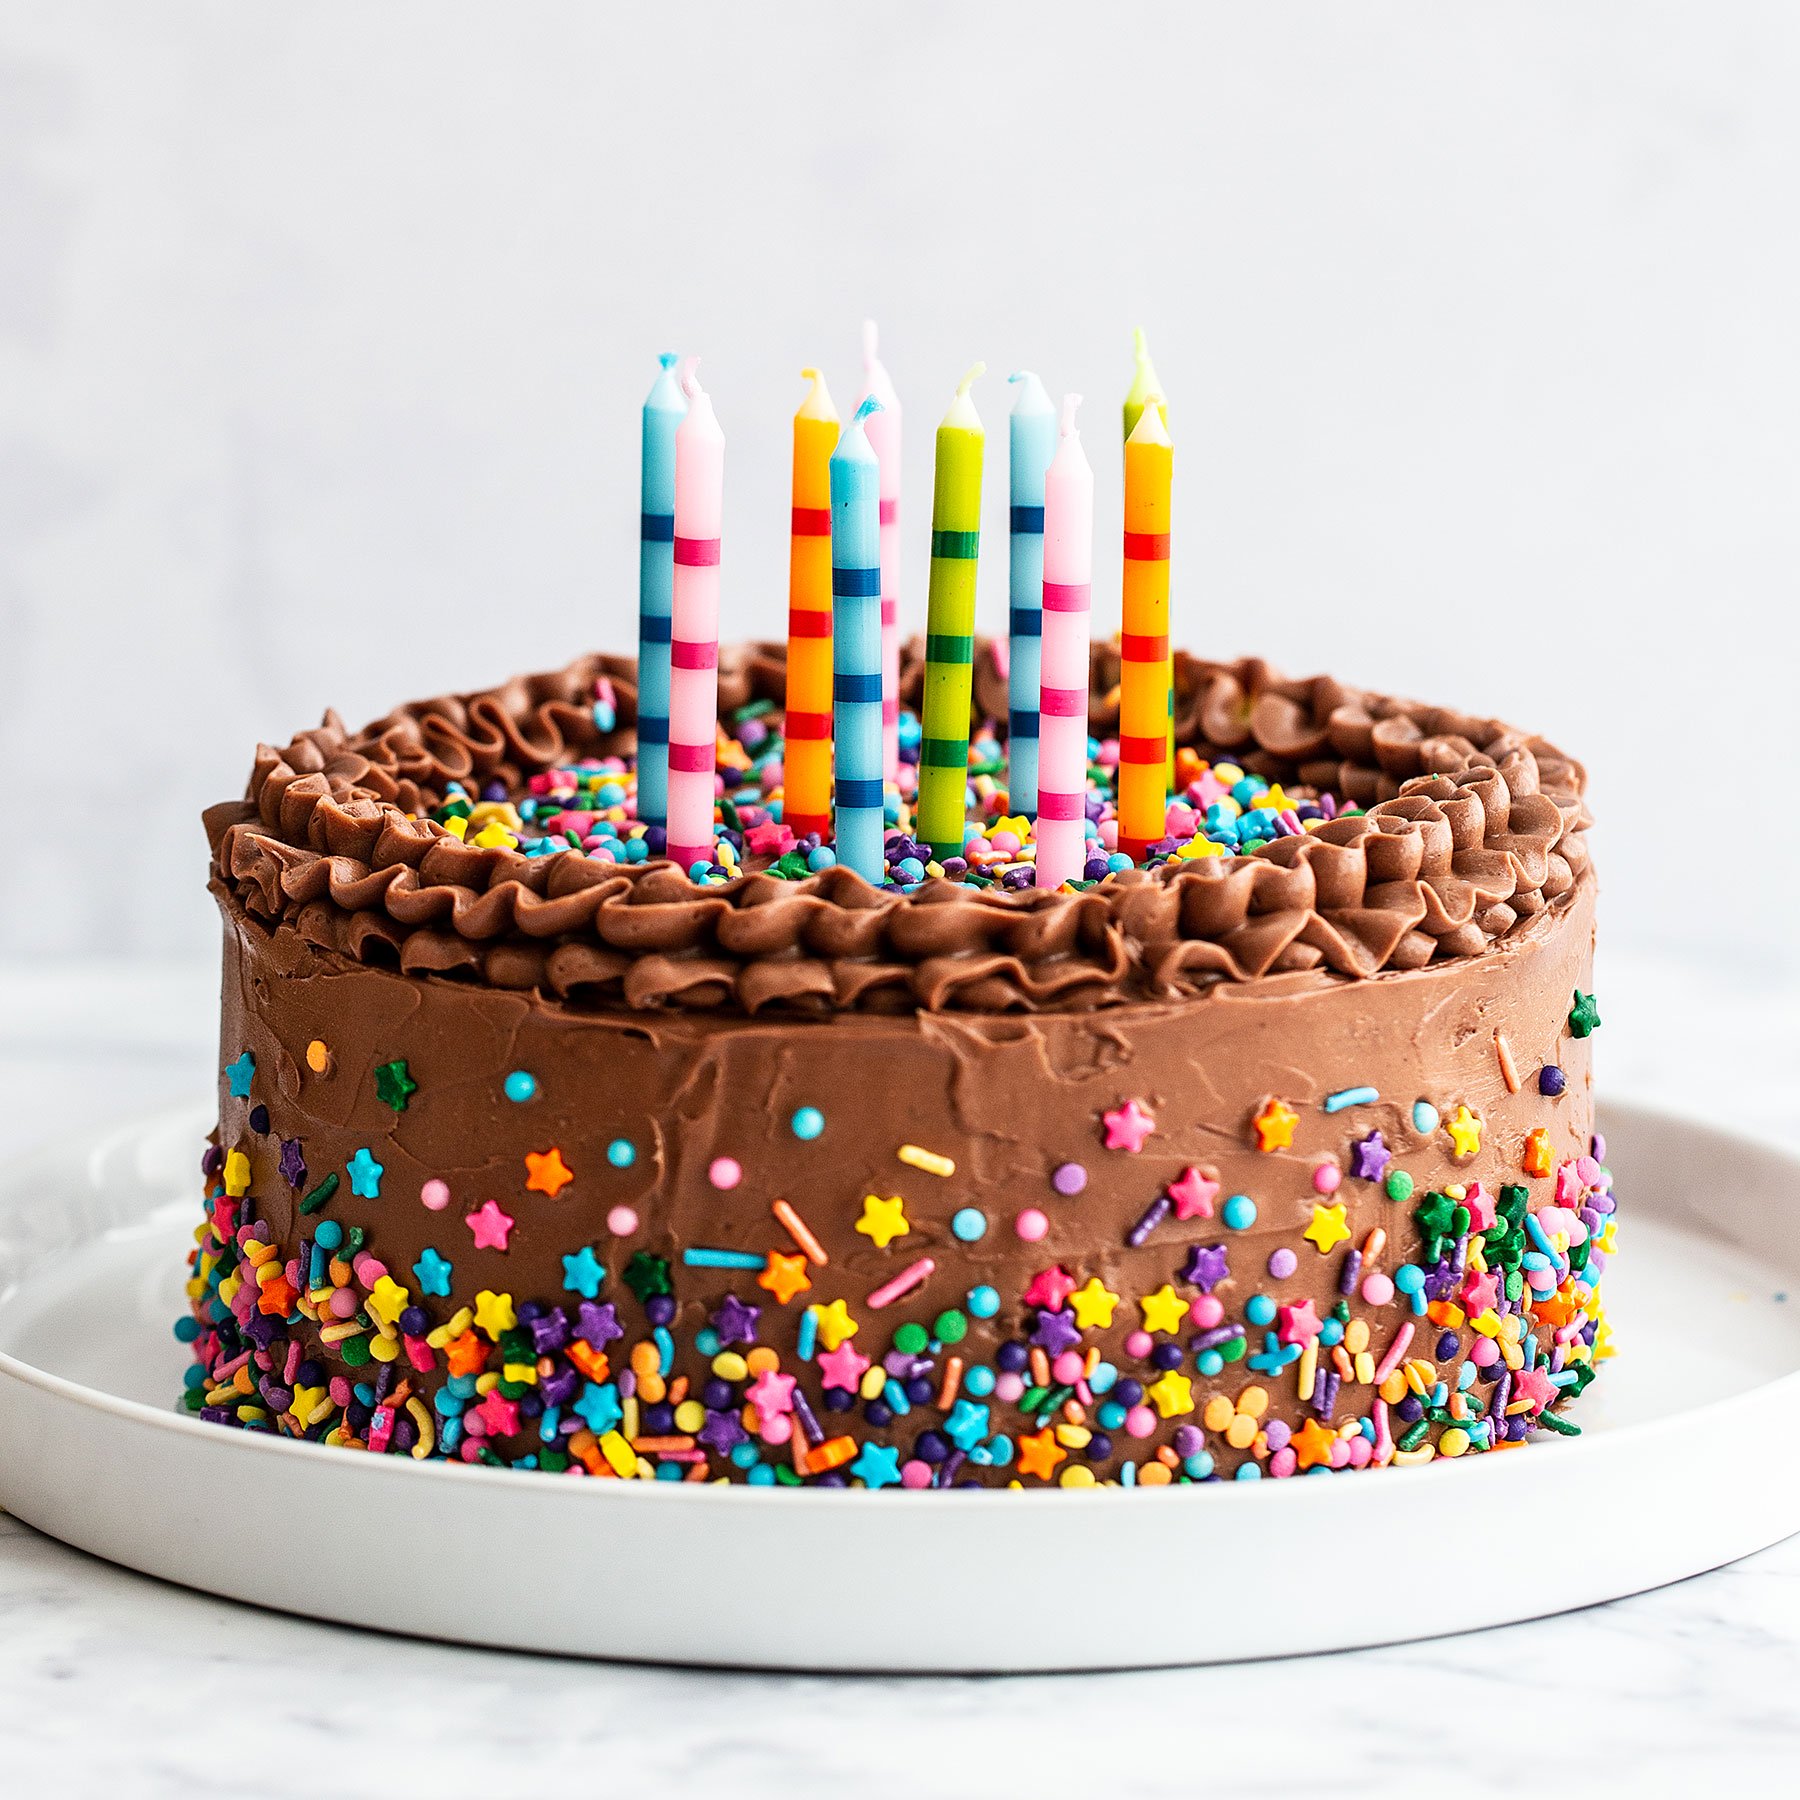 177700 Birthday Cake Stock Photos Pictures  RoyaltyFree Images   iStock  Birthday Birthday cake slice Birthday cake icon